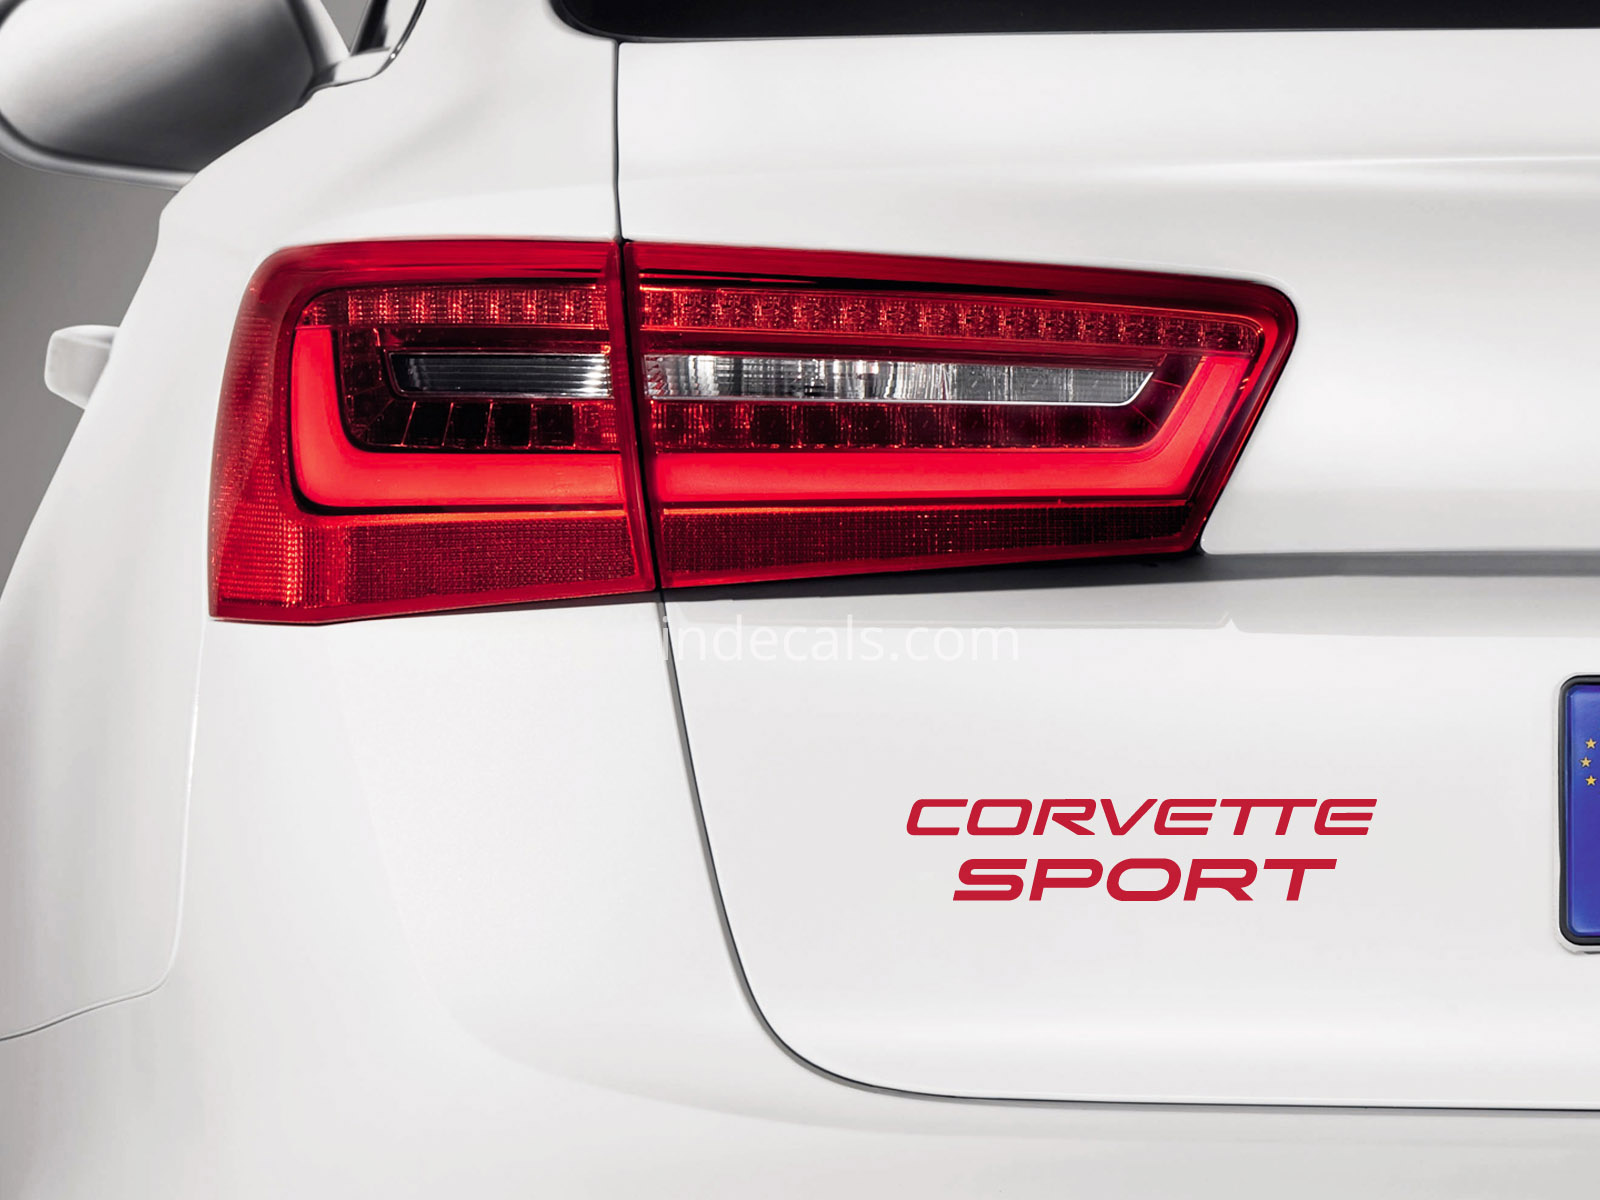 1 x Corvette Sports Sticker for Trunk - Red